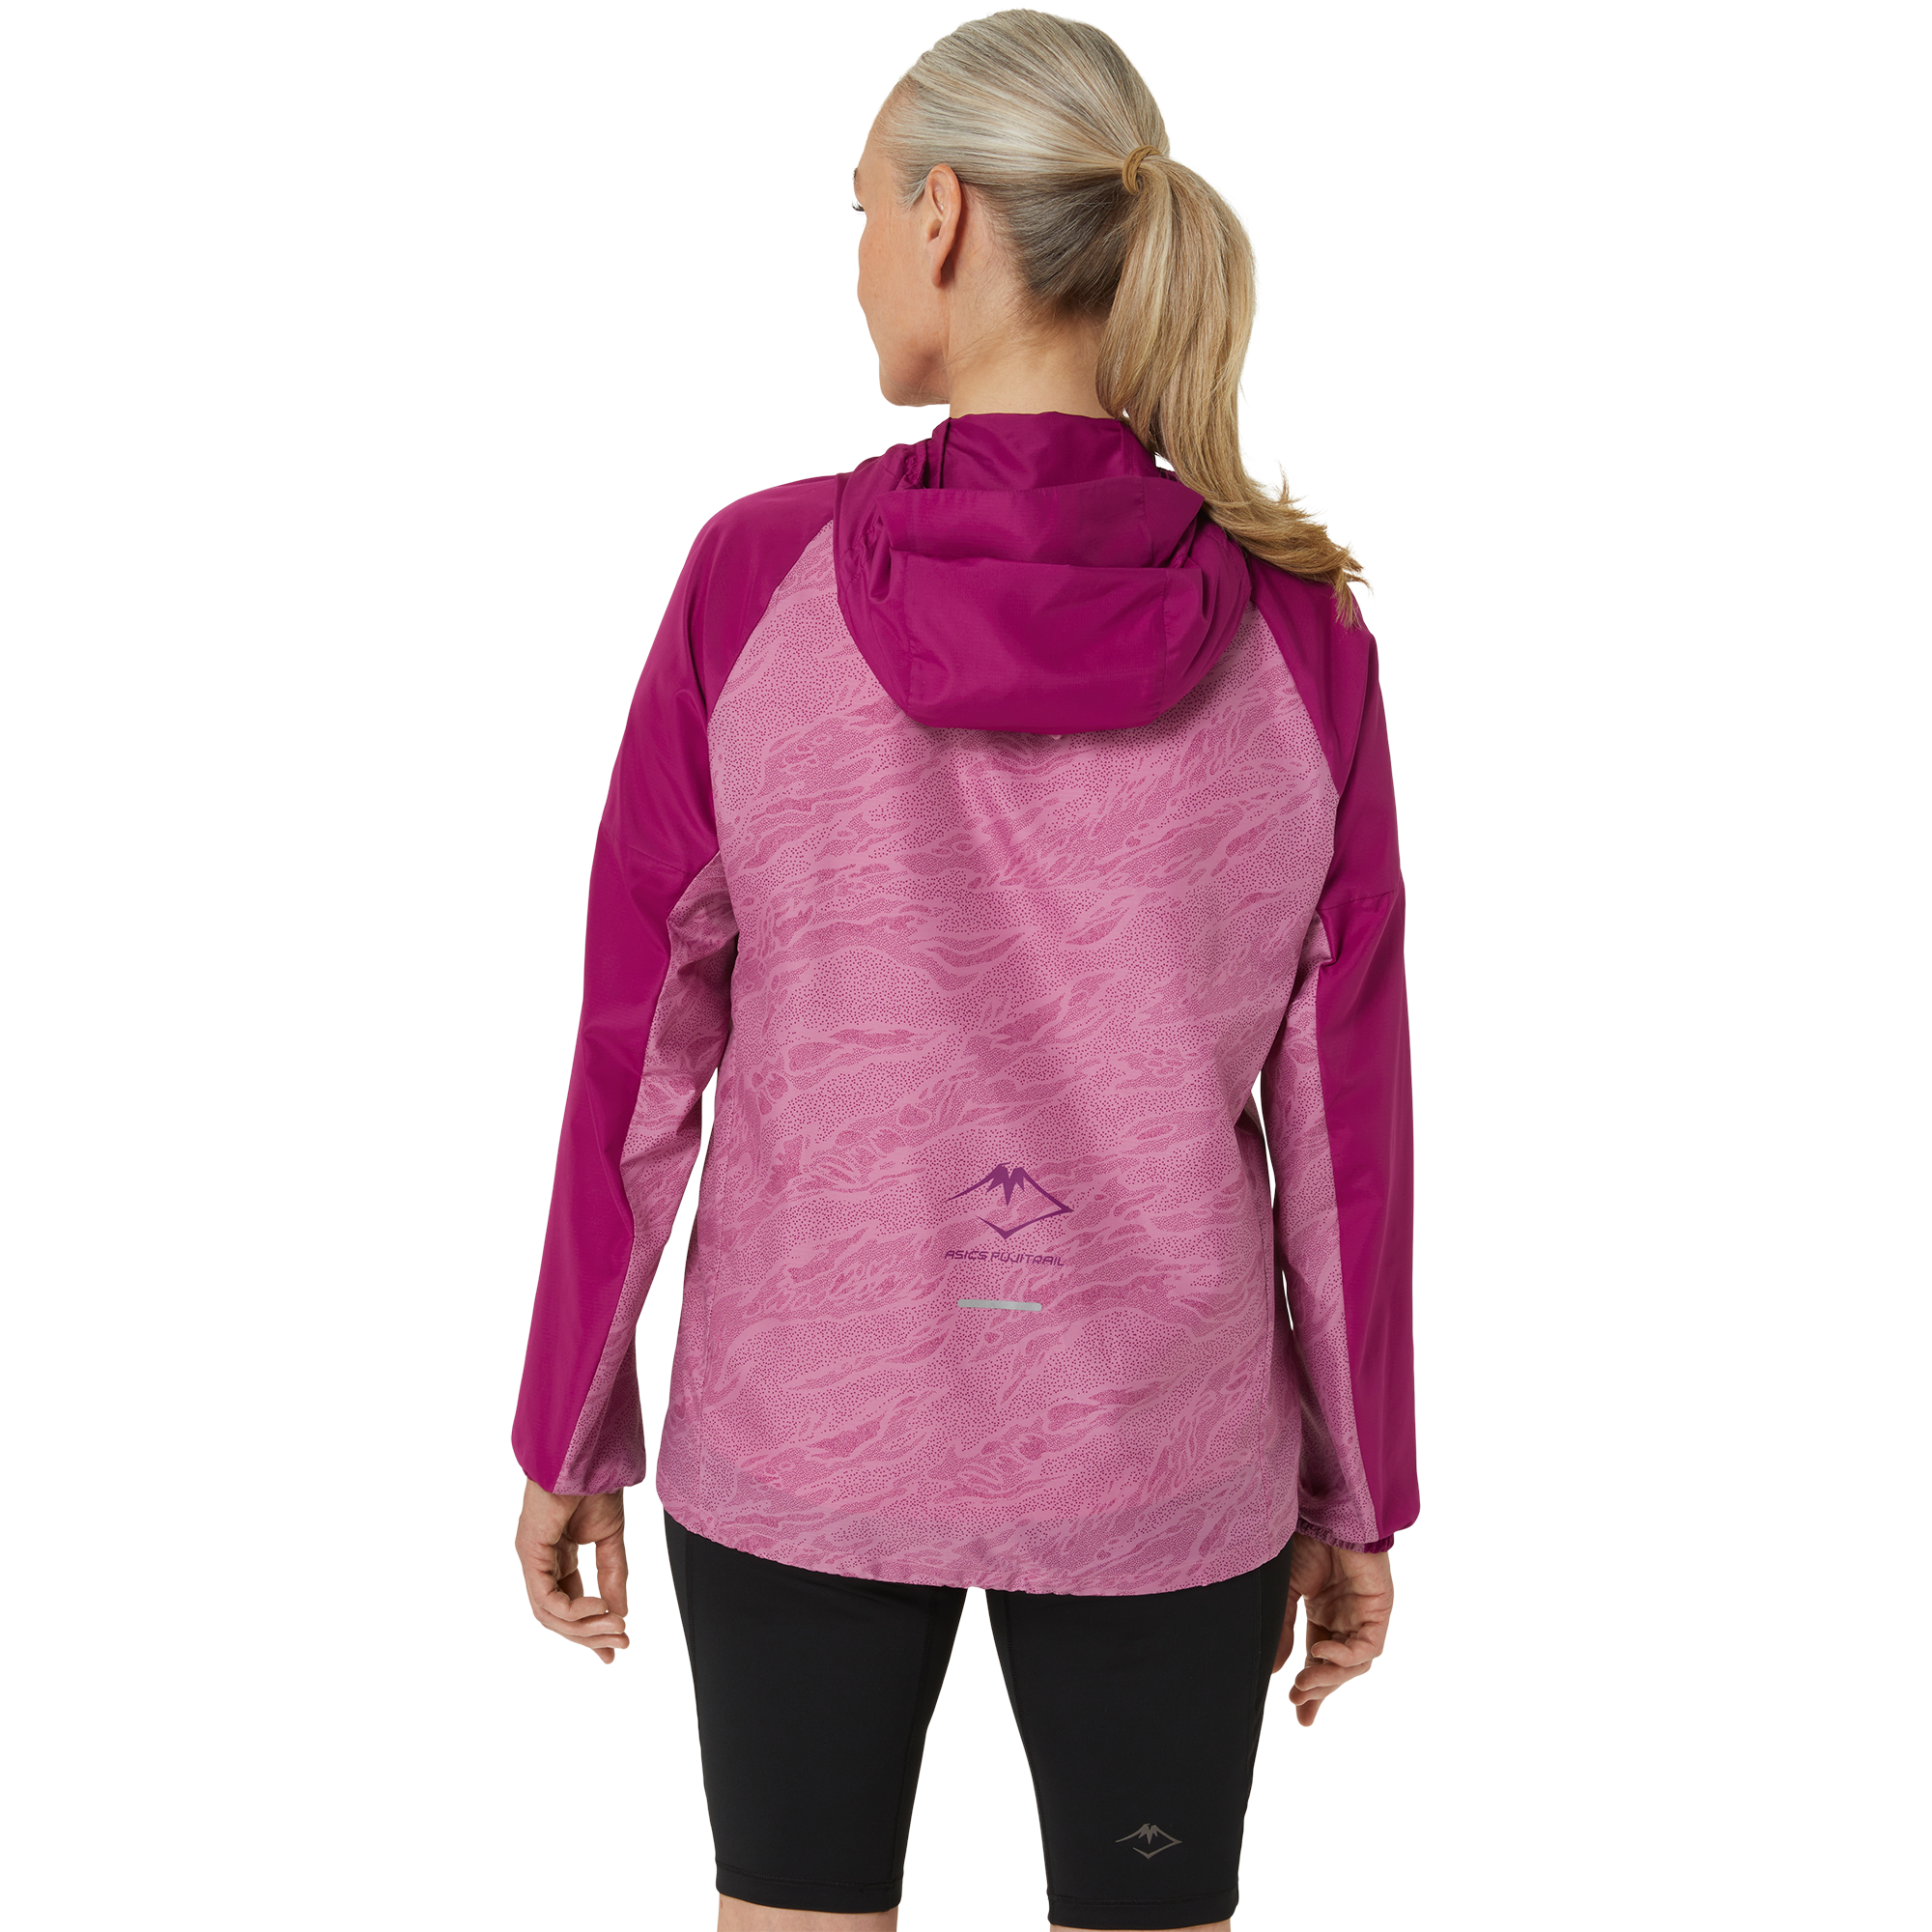 Running - Bittl Sport Jacket soft berry ASICS Women at Shop Packable Fujitrail